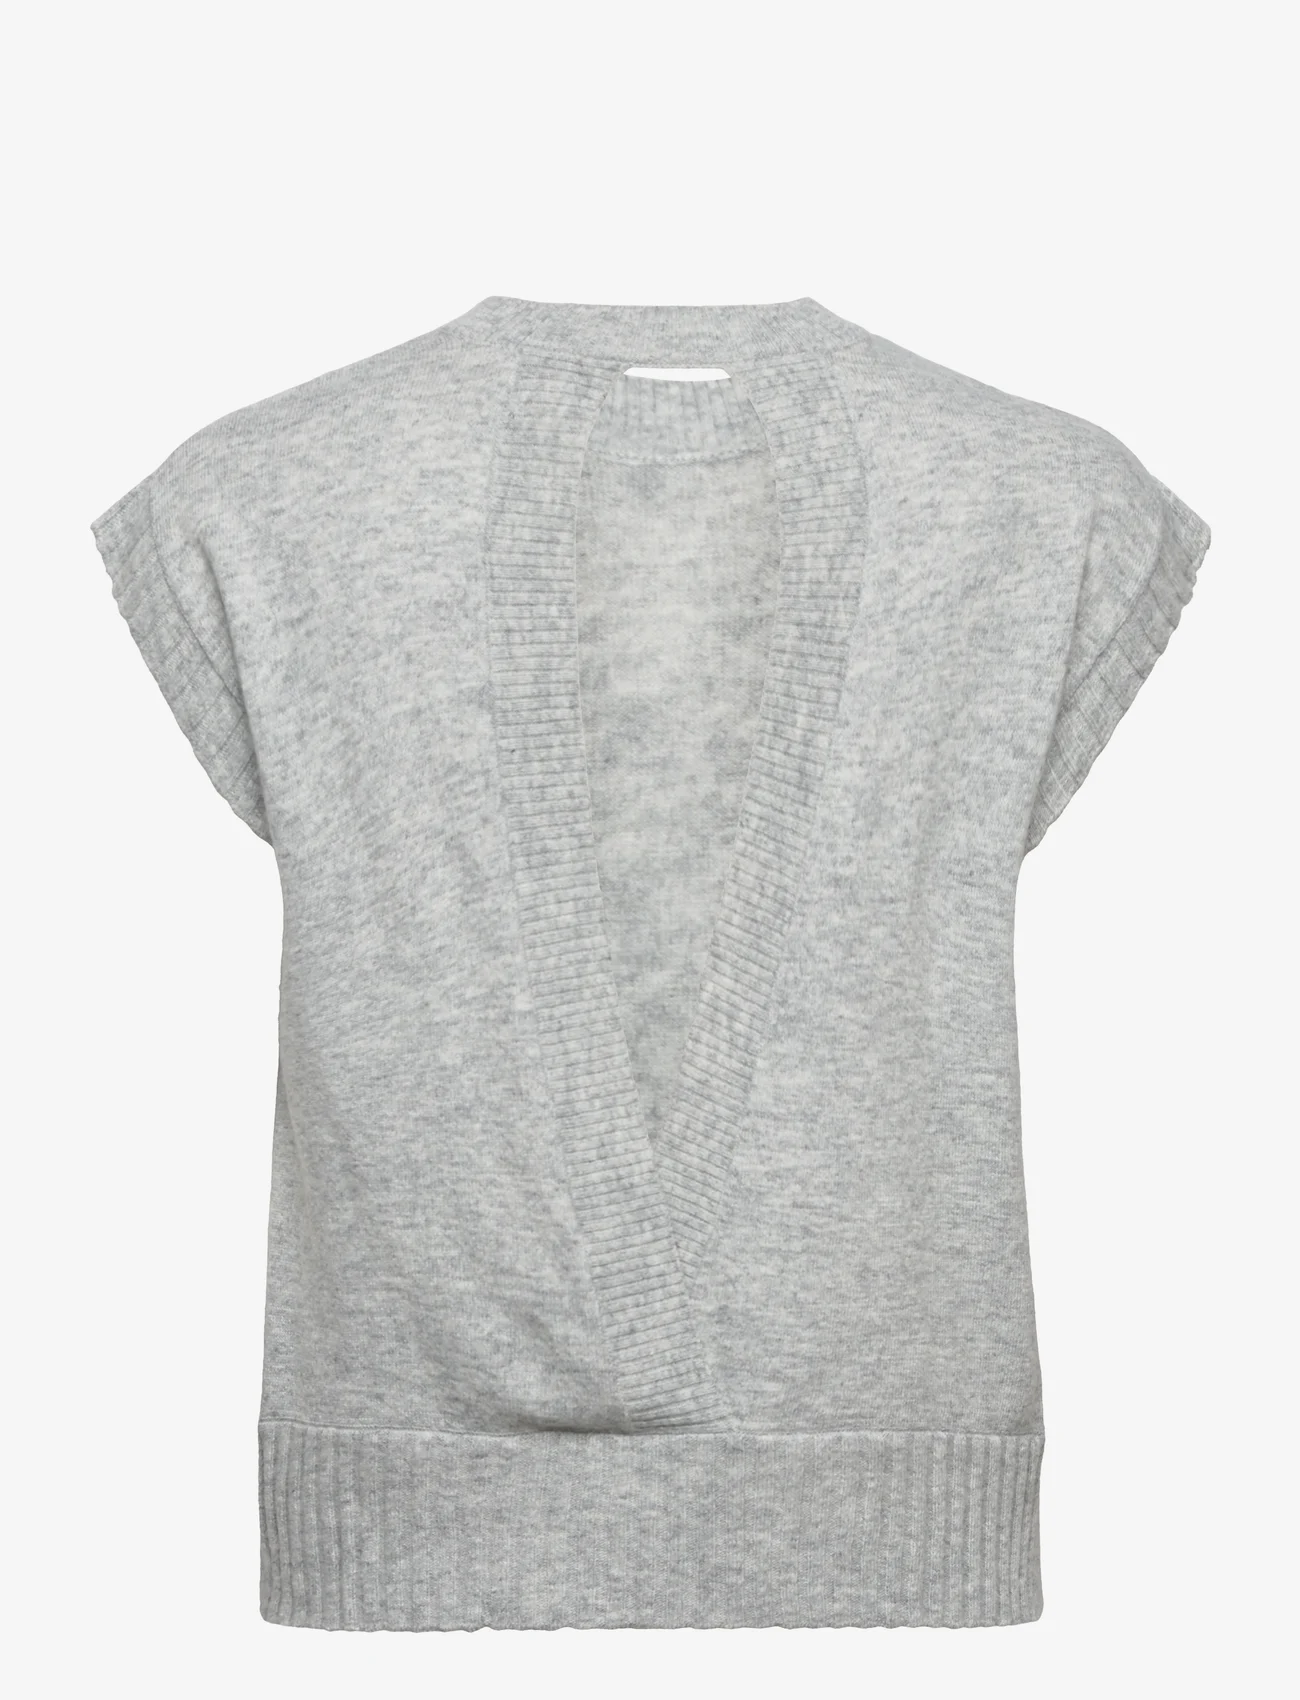 Rabens Saloner - Rodine - Cashmix openback sweater - jumpers - light grey melan - 1